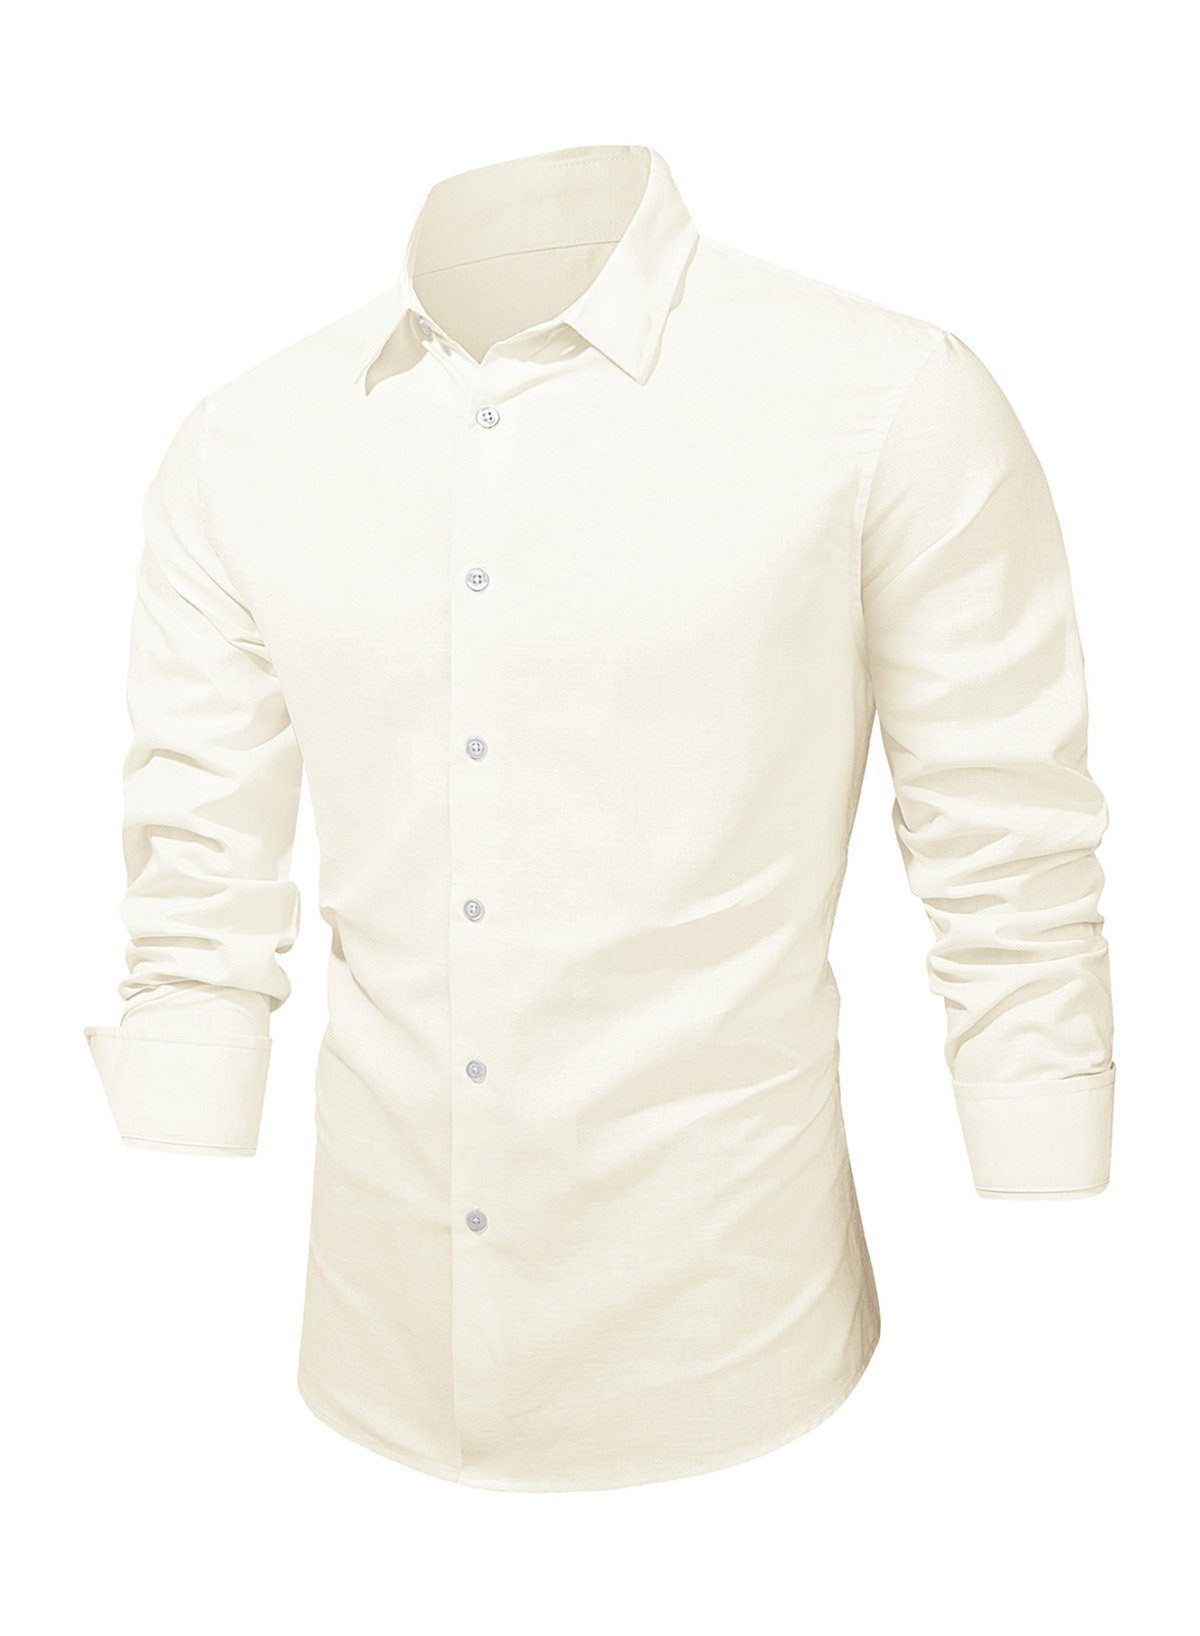 JMIERR Leinenhemd Langarm Hemden Shirts Casual Freizeithemd Baumwolle Stehkragenhemd (Leinenhemd) Regular Langarm Kentkragen Uni